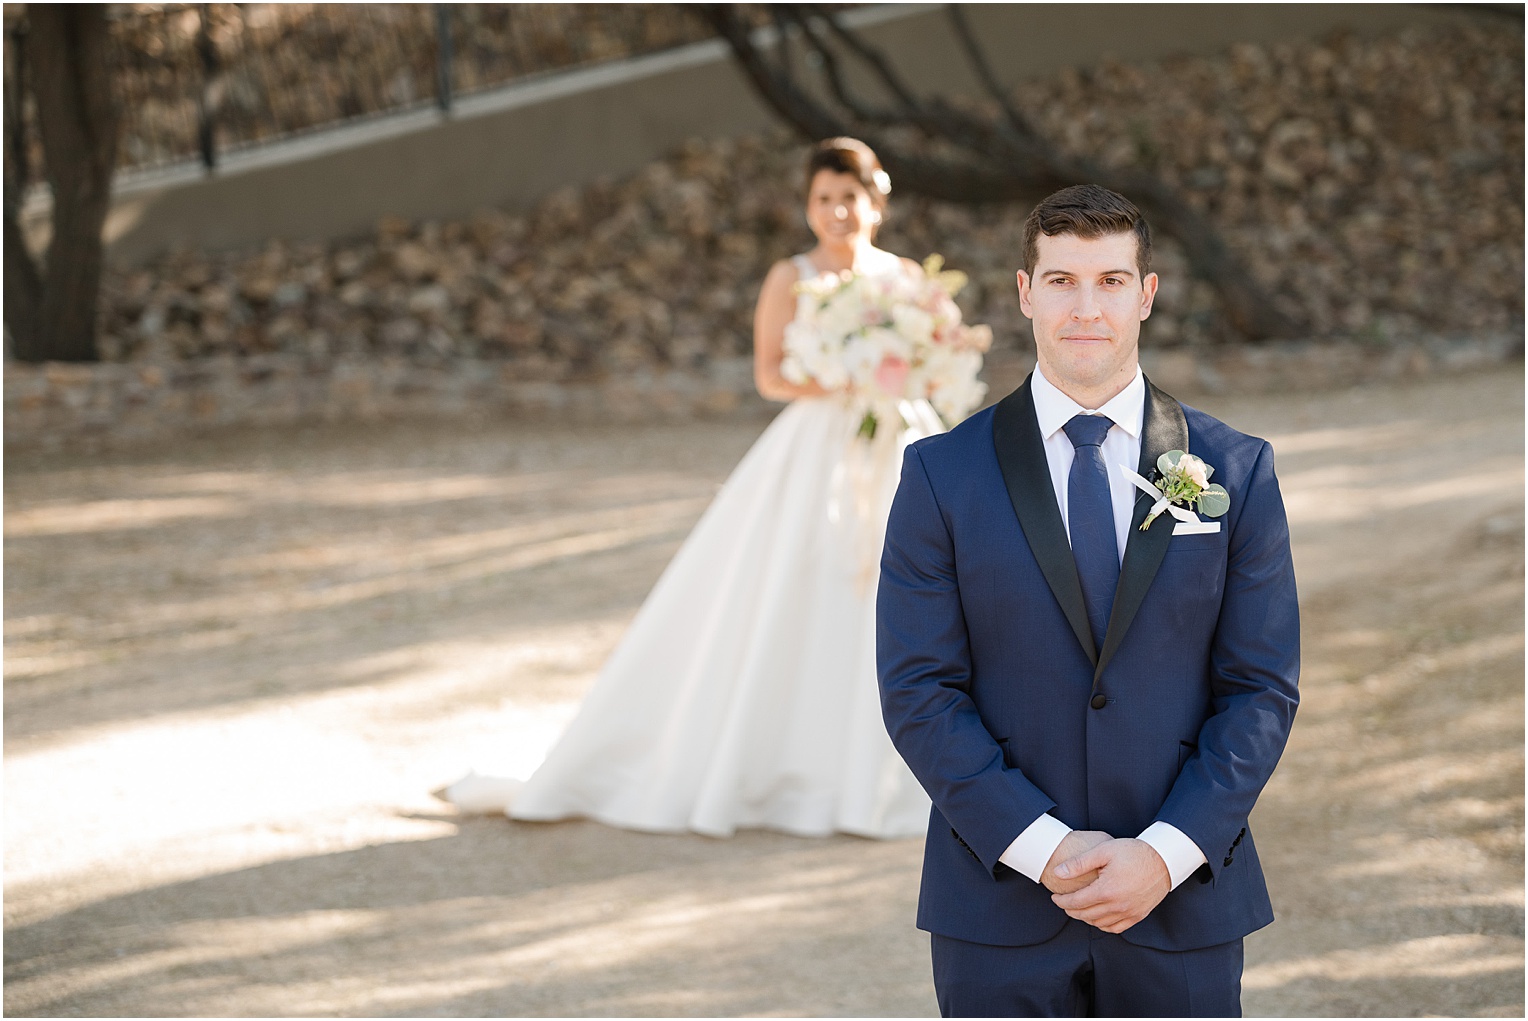 Saguaro Buttes Wedding Tucson, Arizona Farnaz & Brian romantic outdoor first look between bride and groom